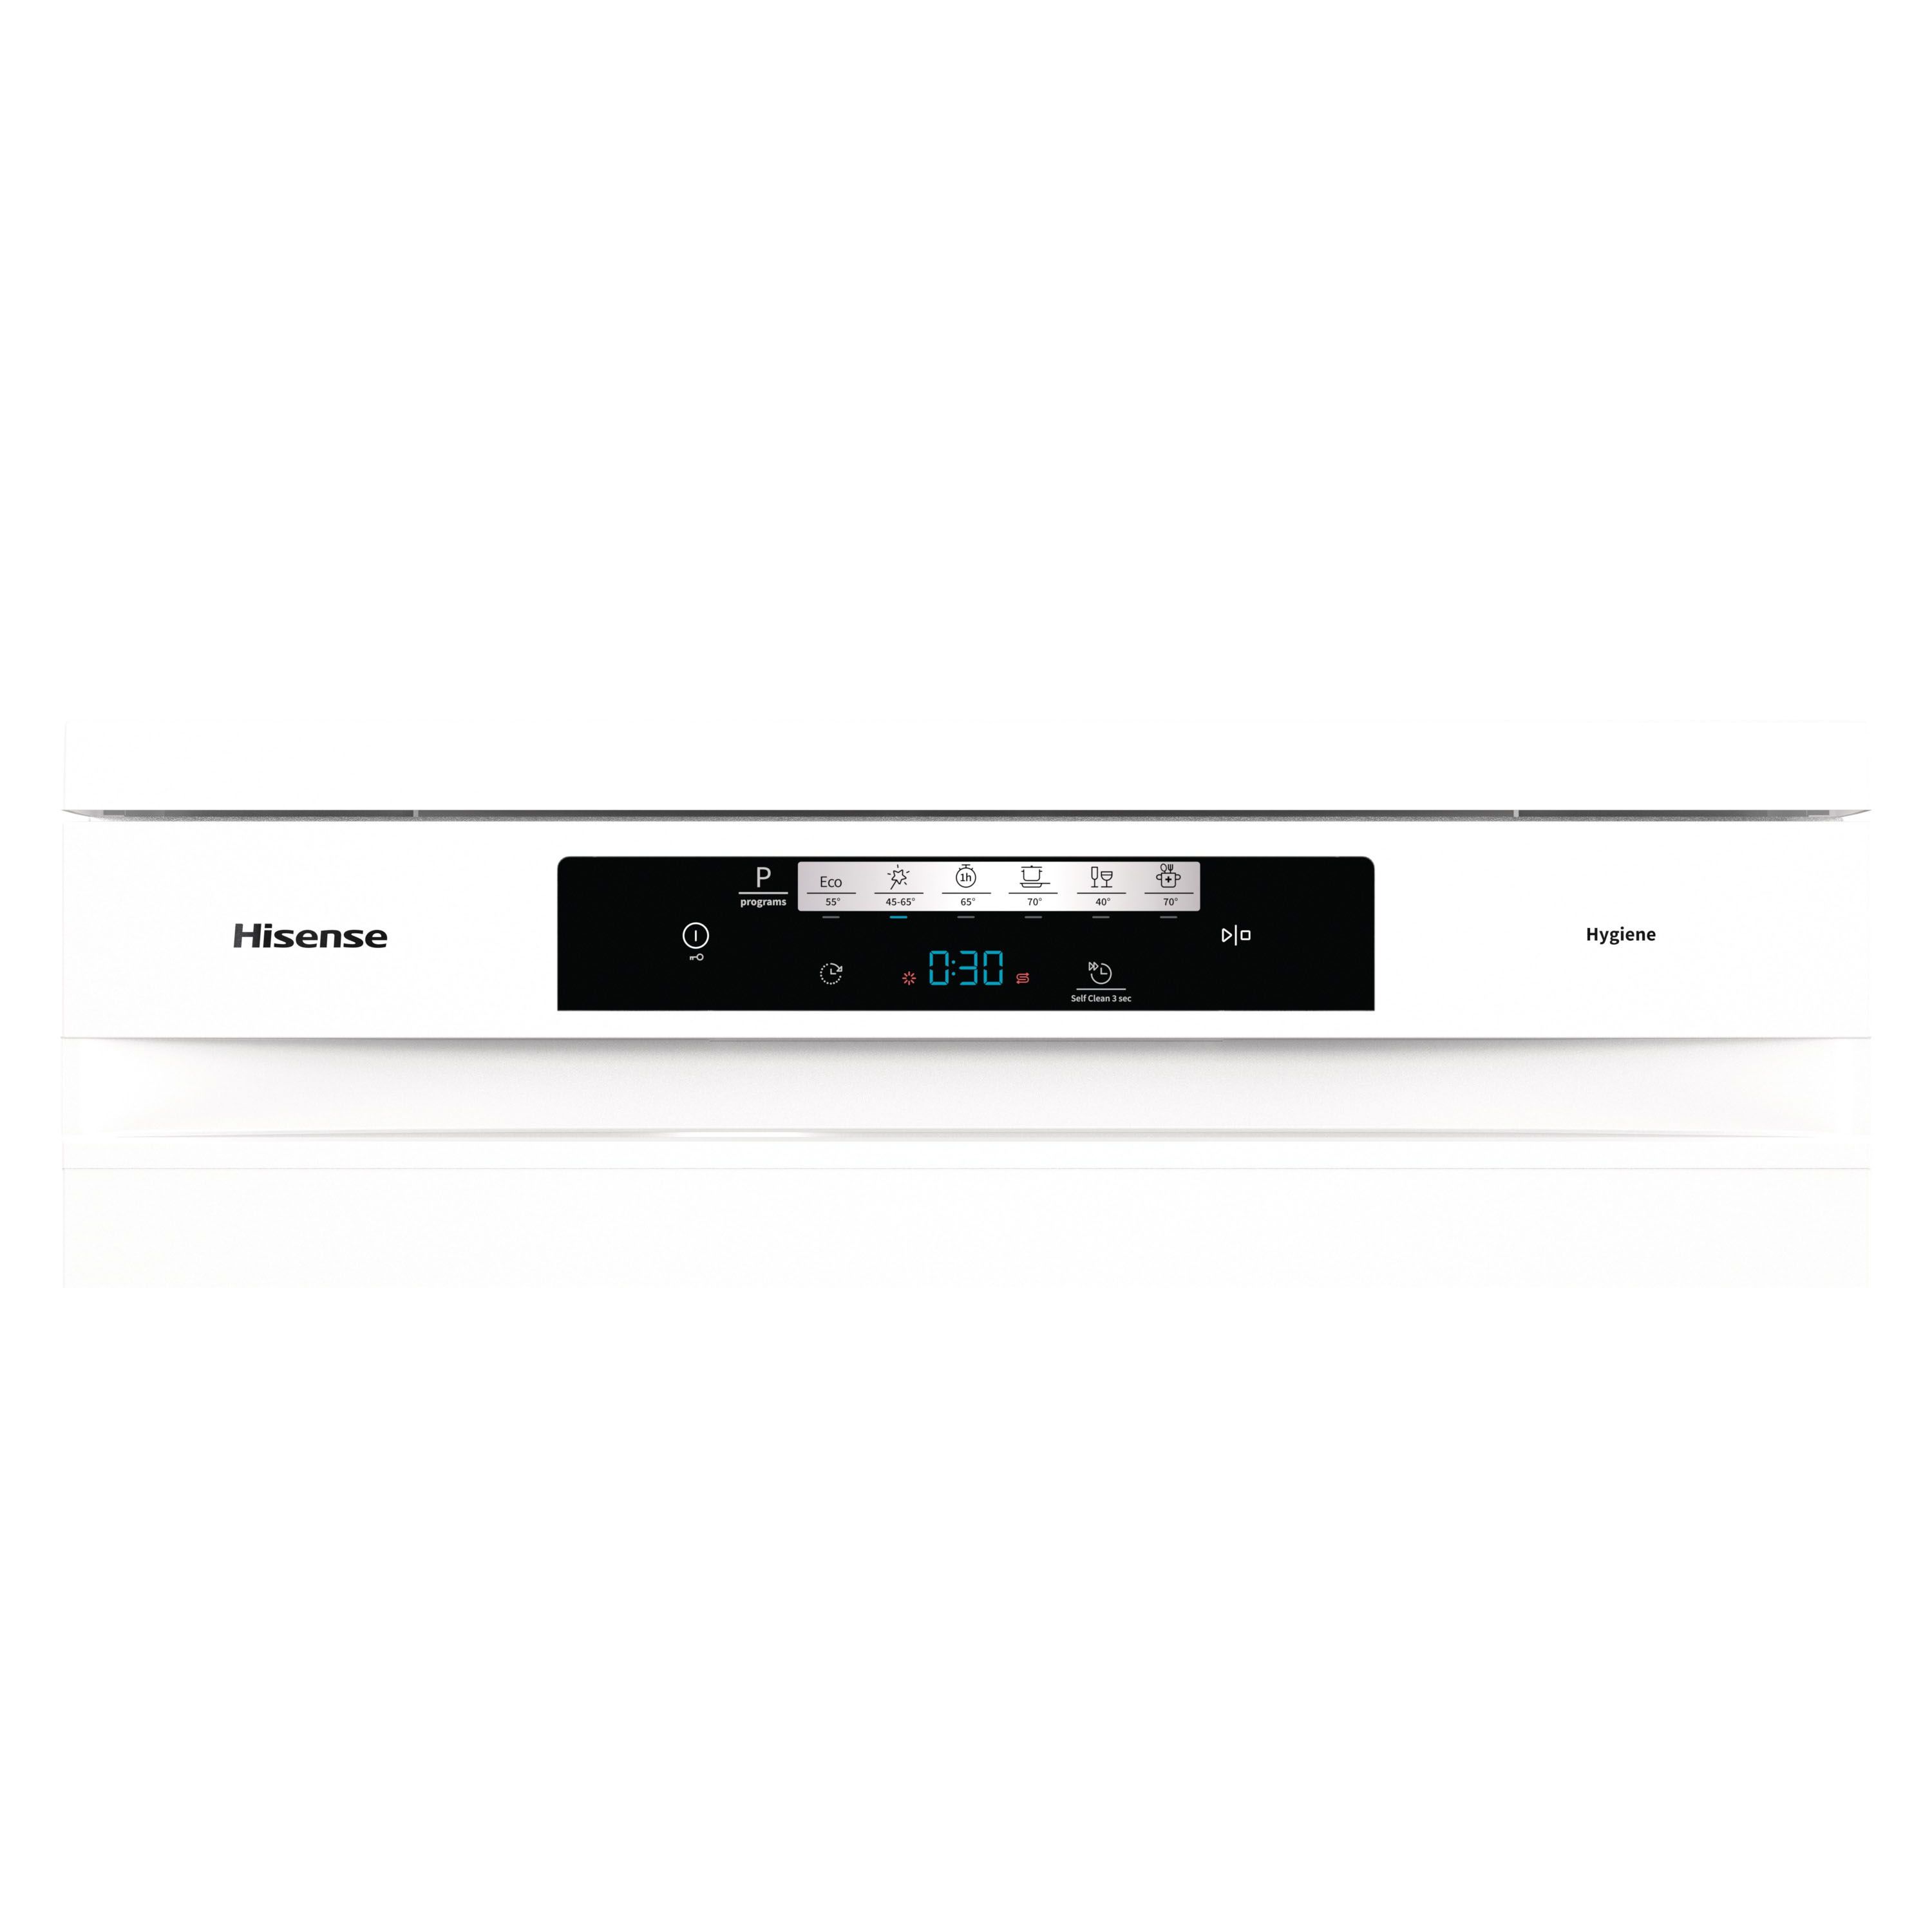 Hisense HS643D60WUK_WH Freestanding Full size Dishwasher - White 